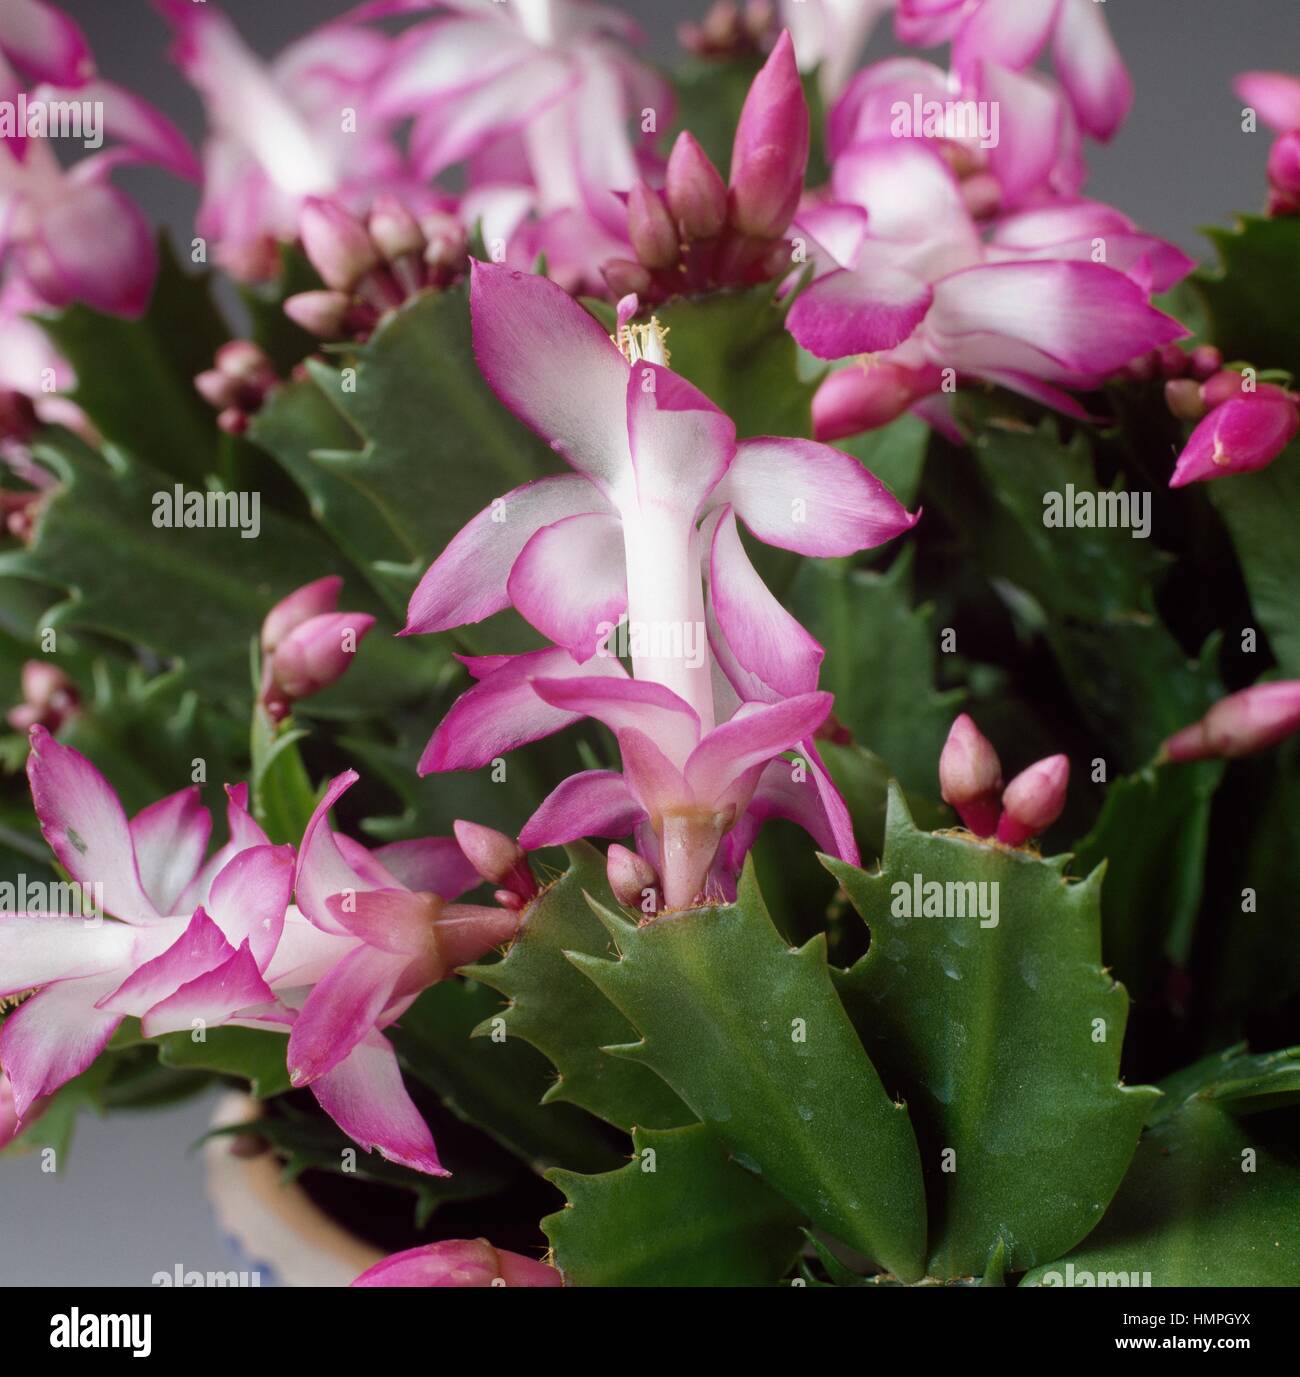 Schlumbergera bridgesii x Wintermarchen, Cactaceae. Dettaglio dei fiori. Foto Stock